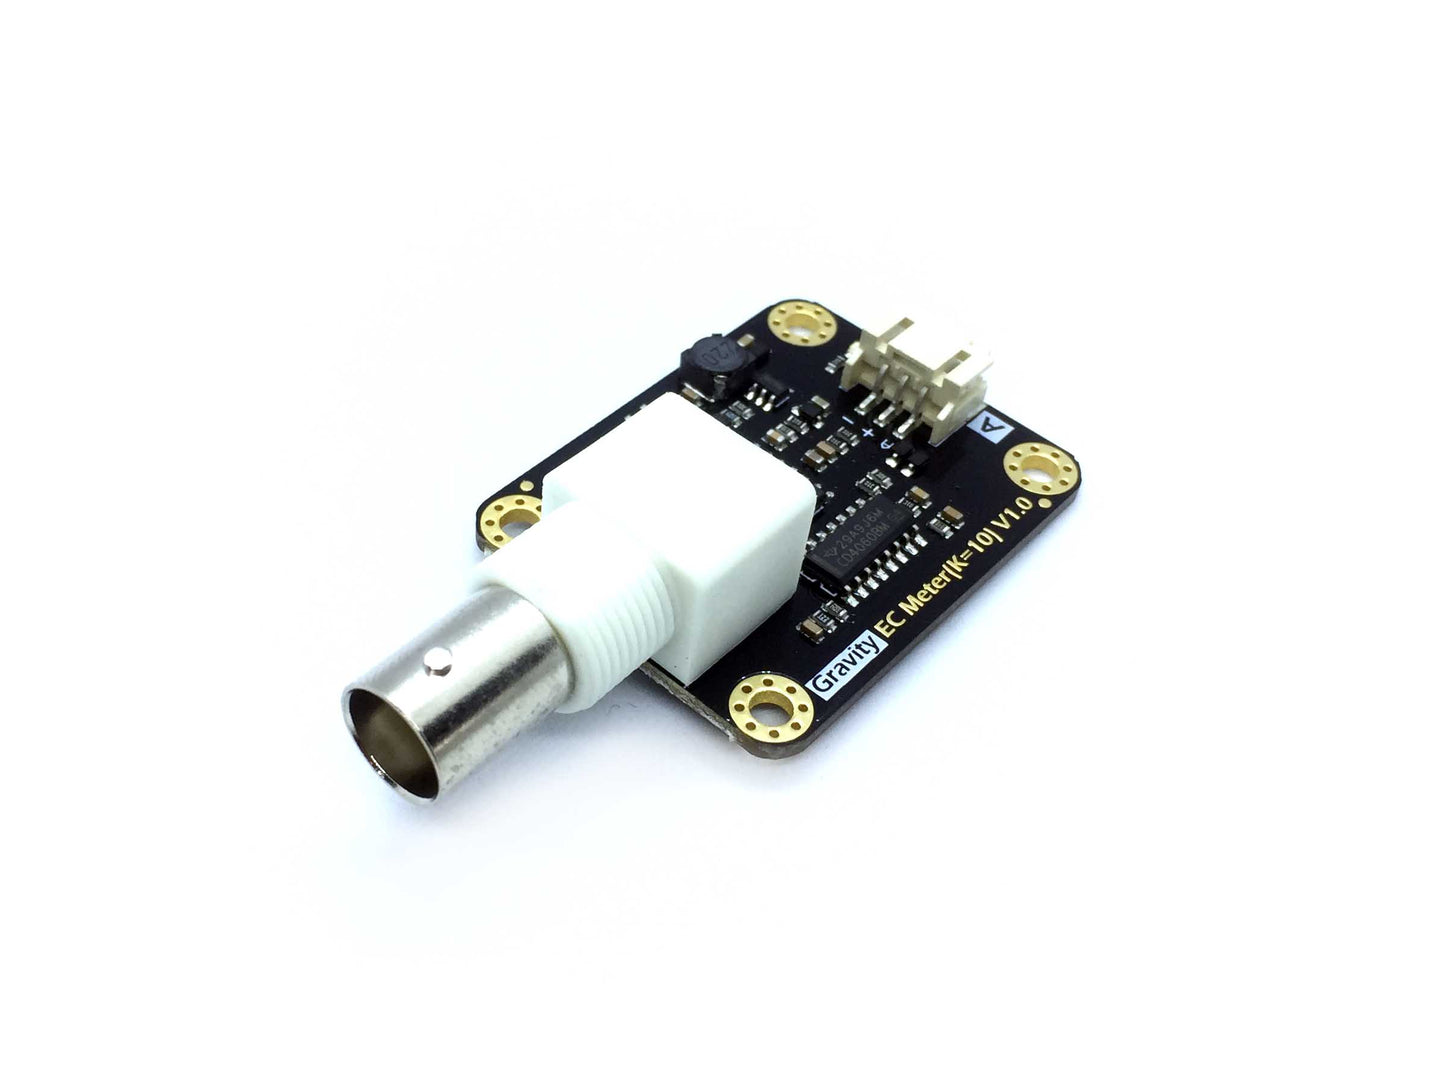 Electrical Conductivity K10 Sensor Kit for Arduino